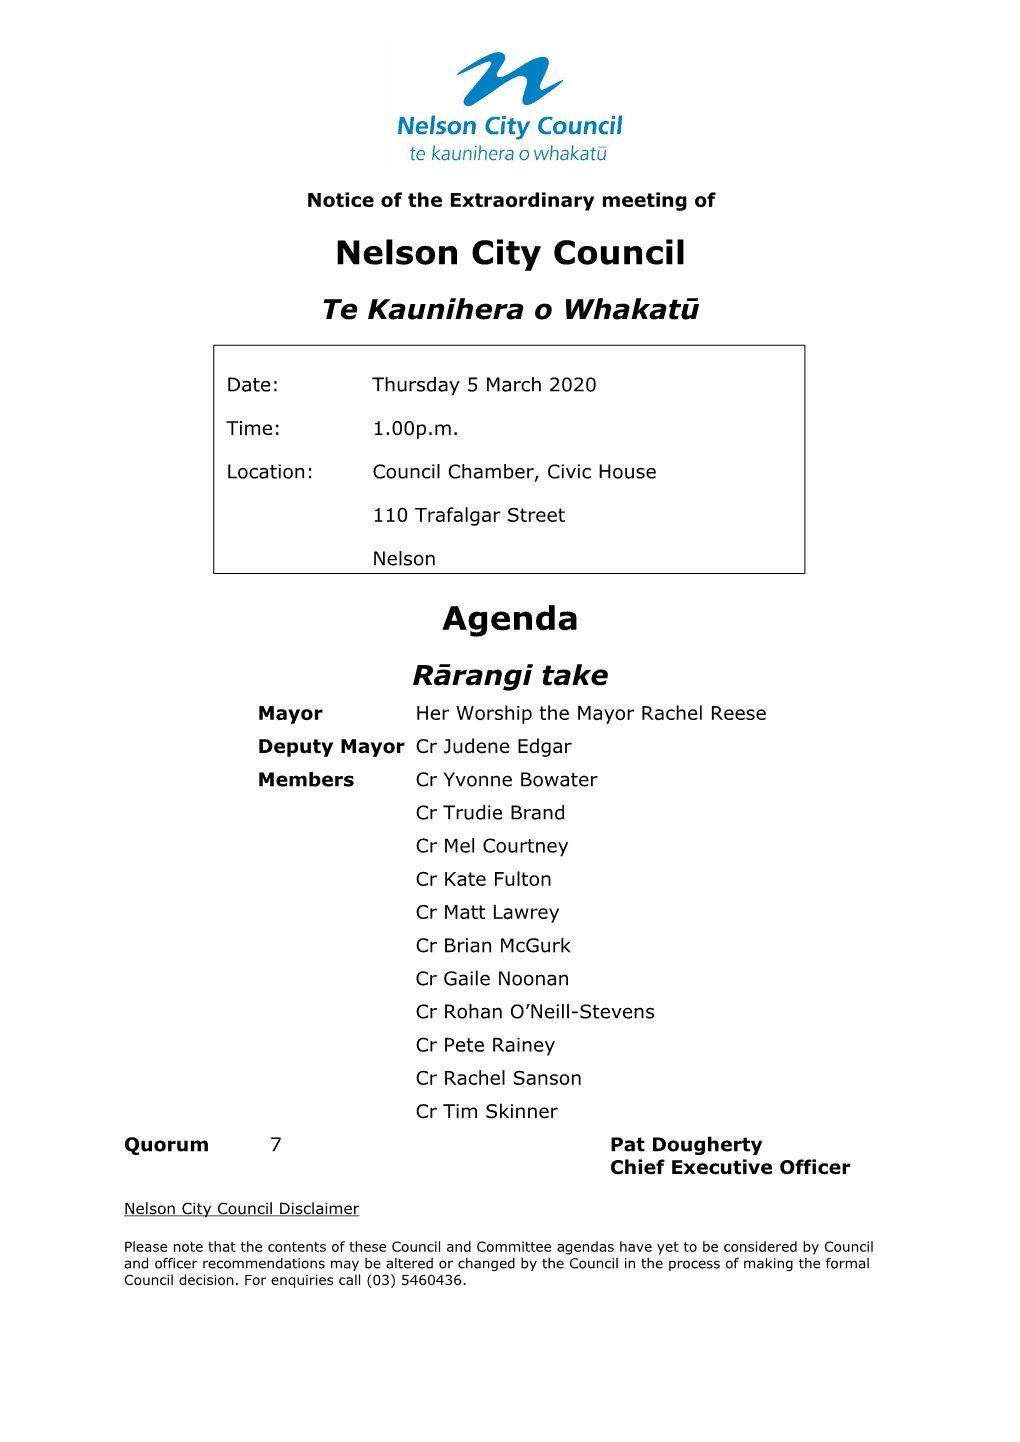 Agenda of Council